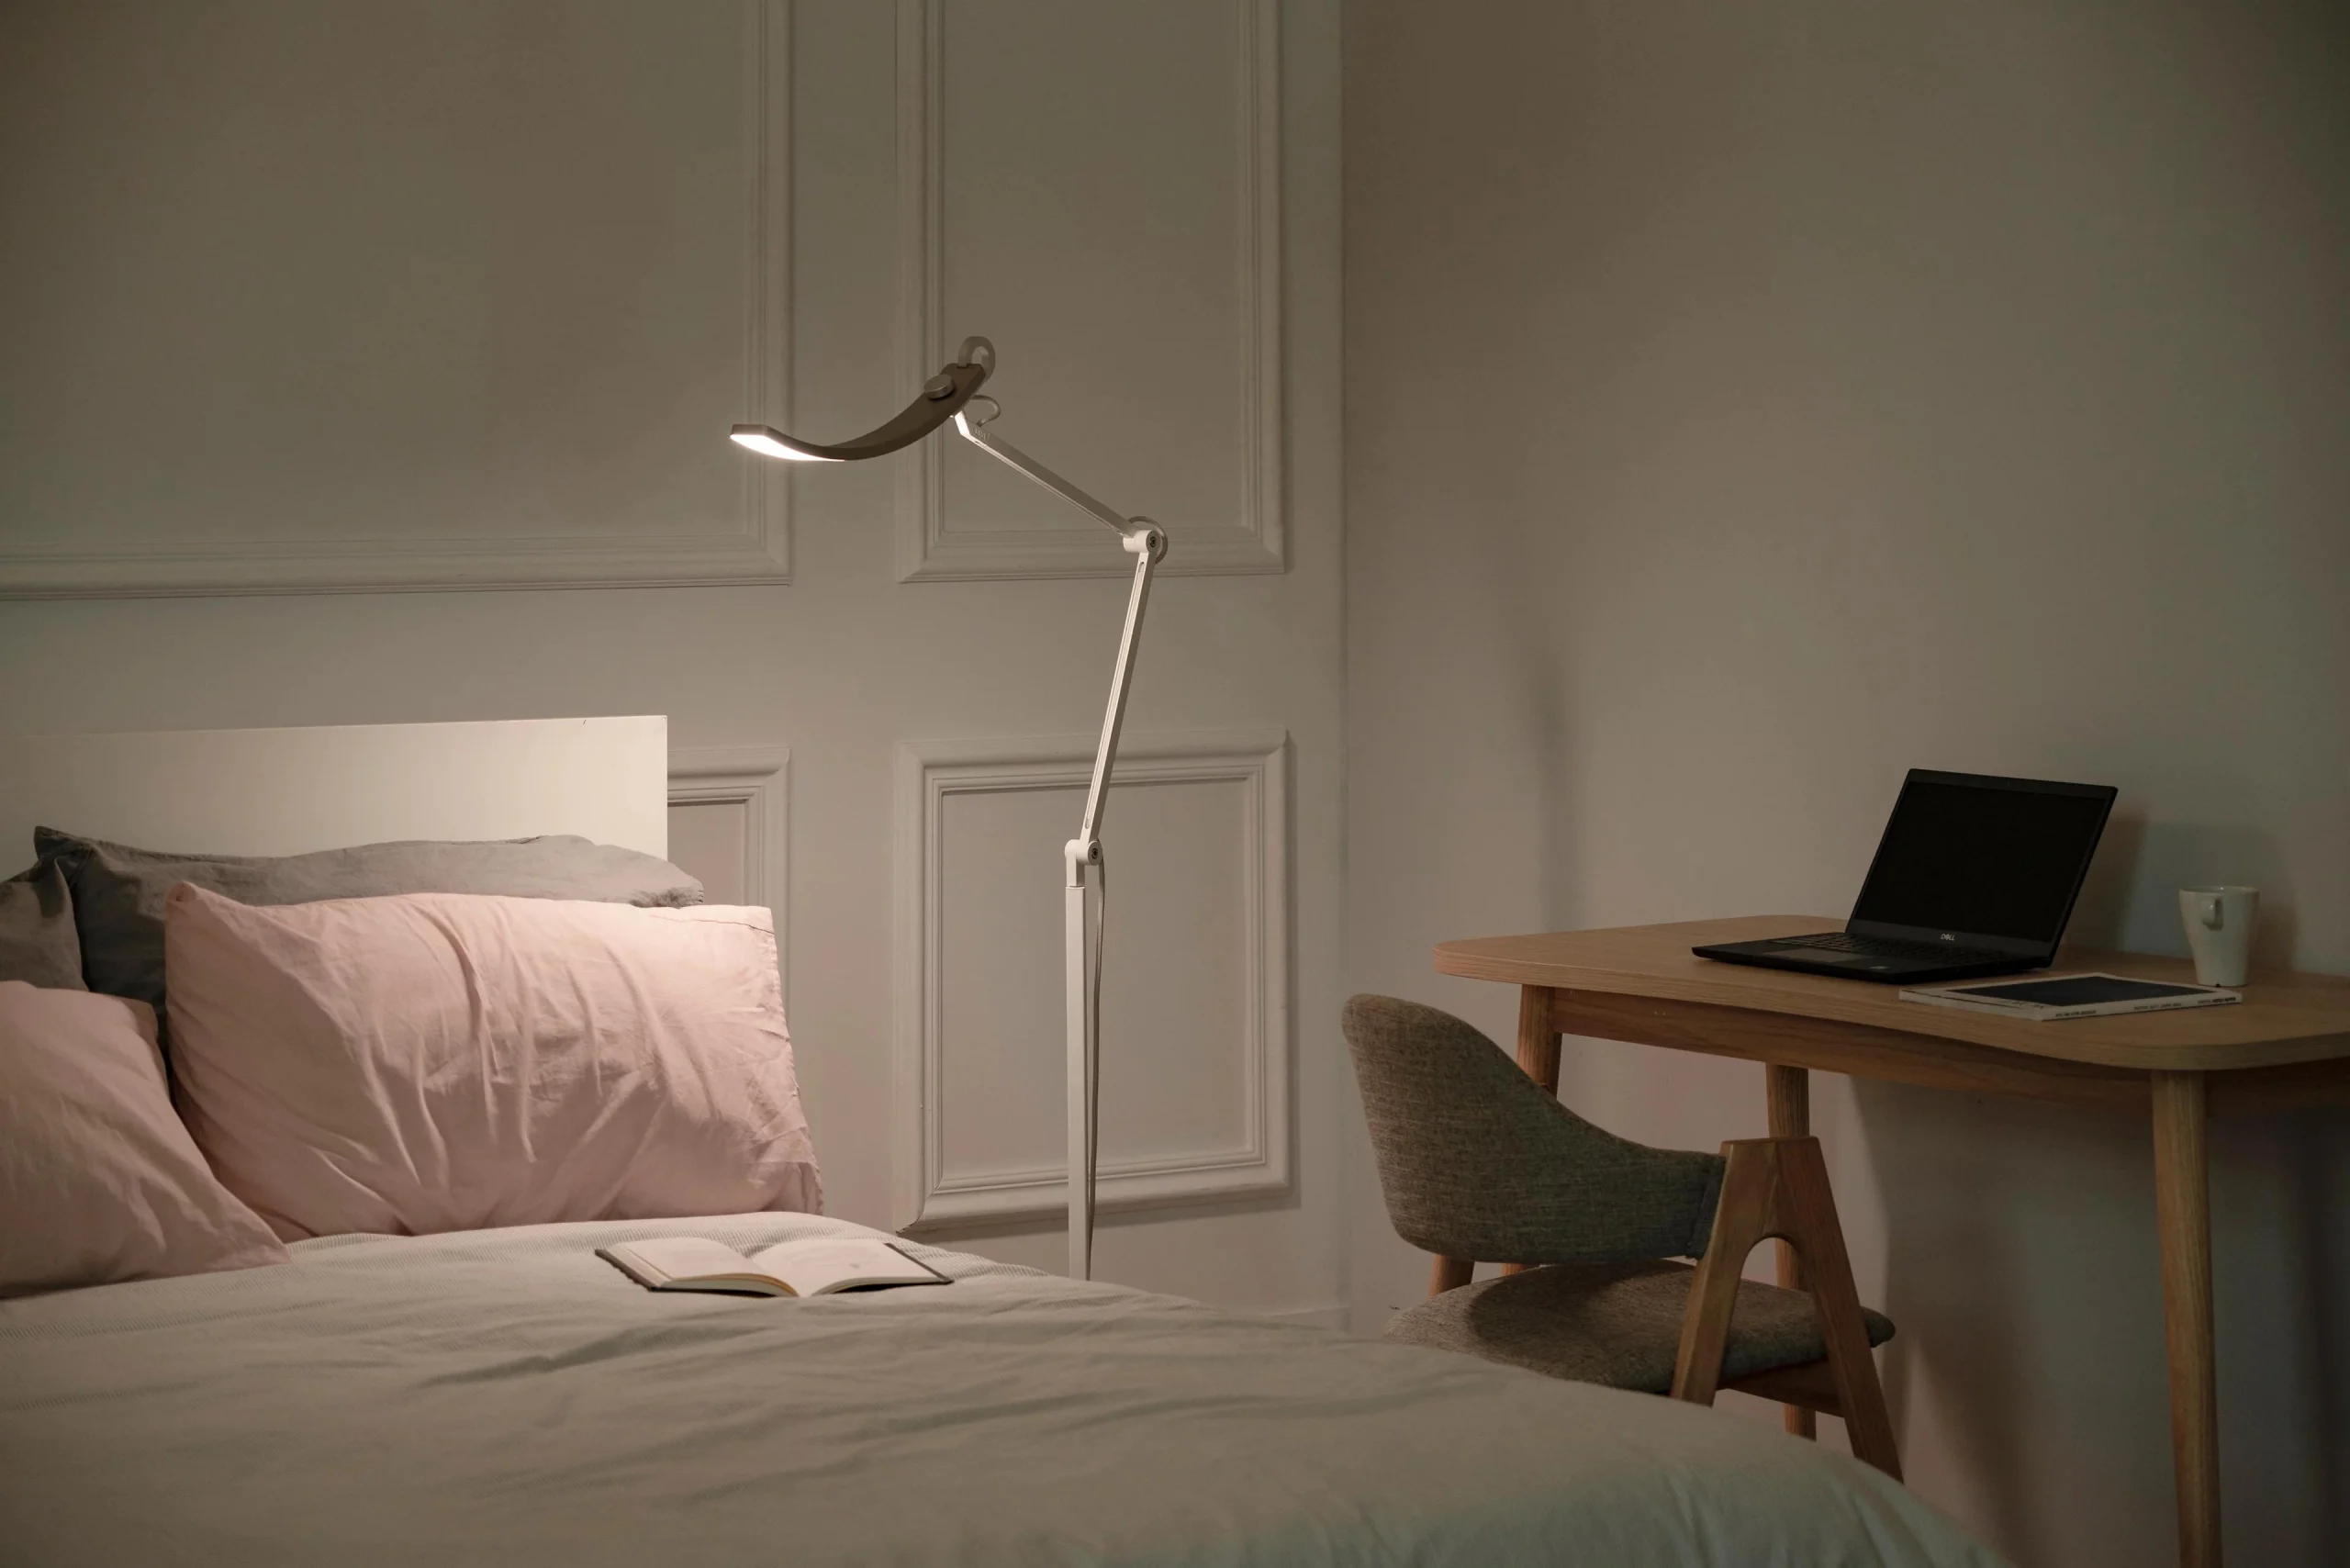 palazzo smoked glass floor lamp - Are floor lamps good in bedrooms